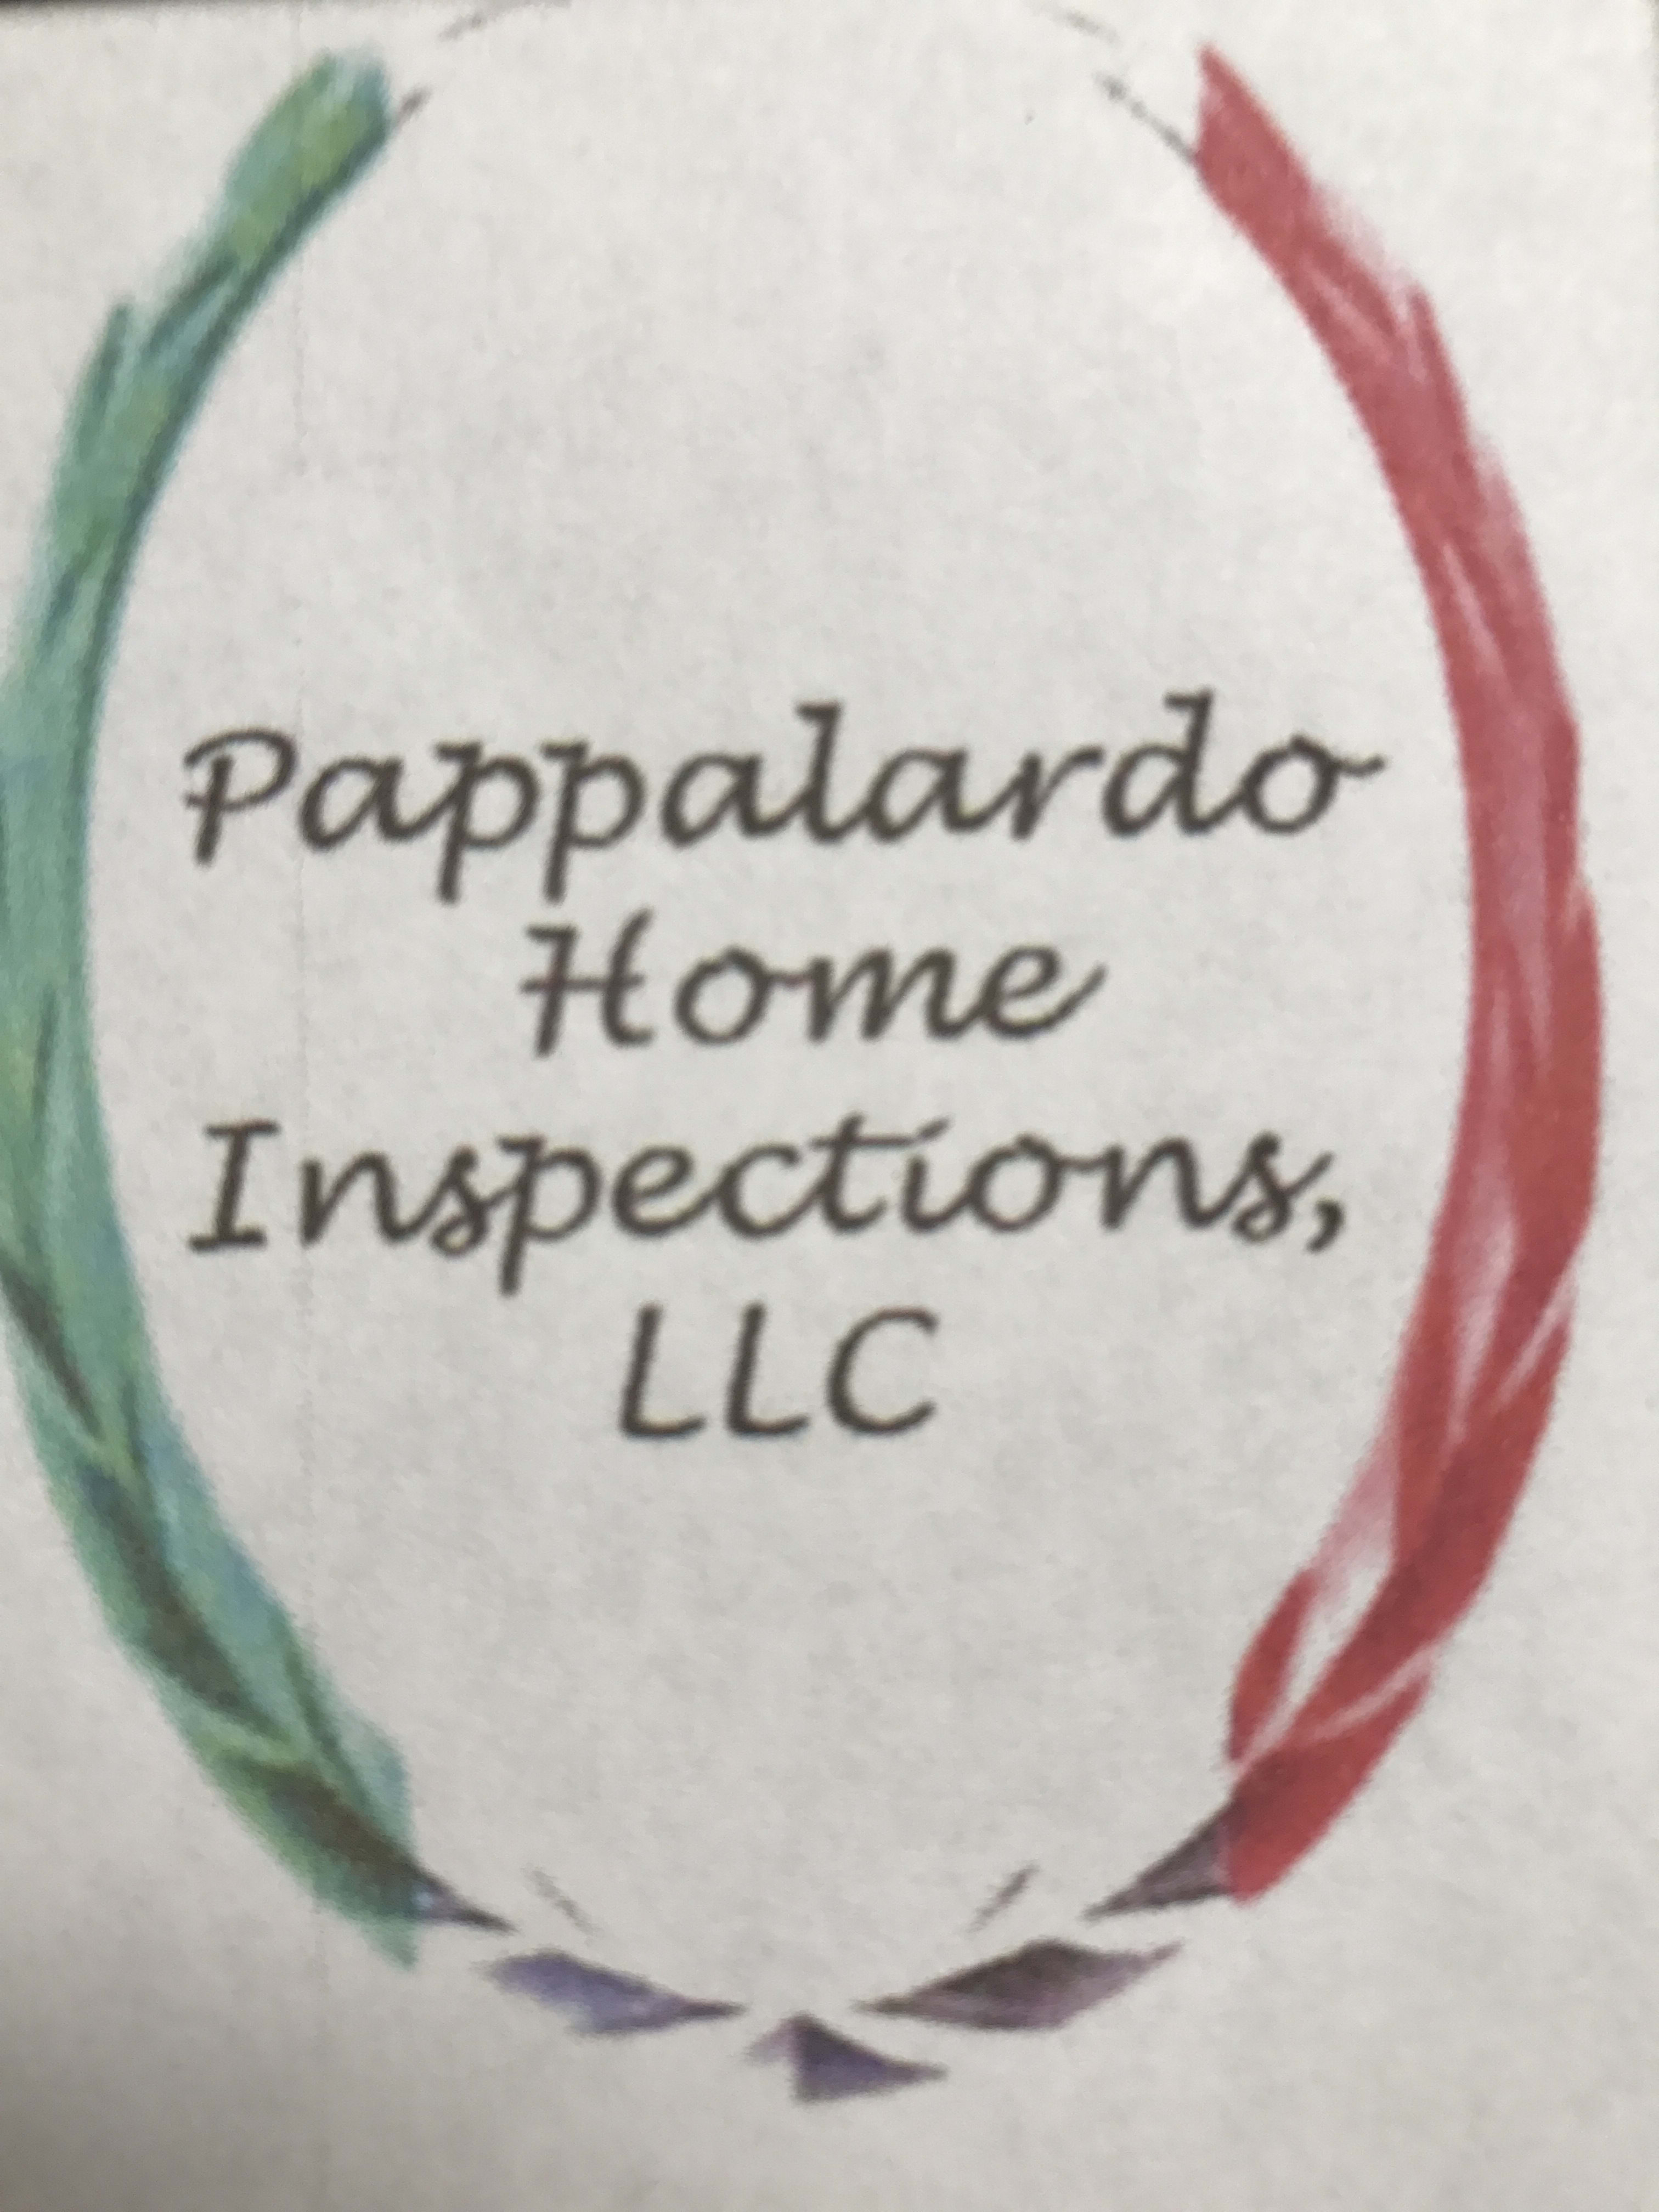 Pappalardo Home Inspections